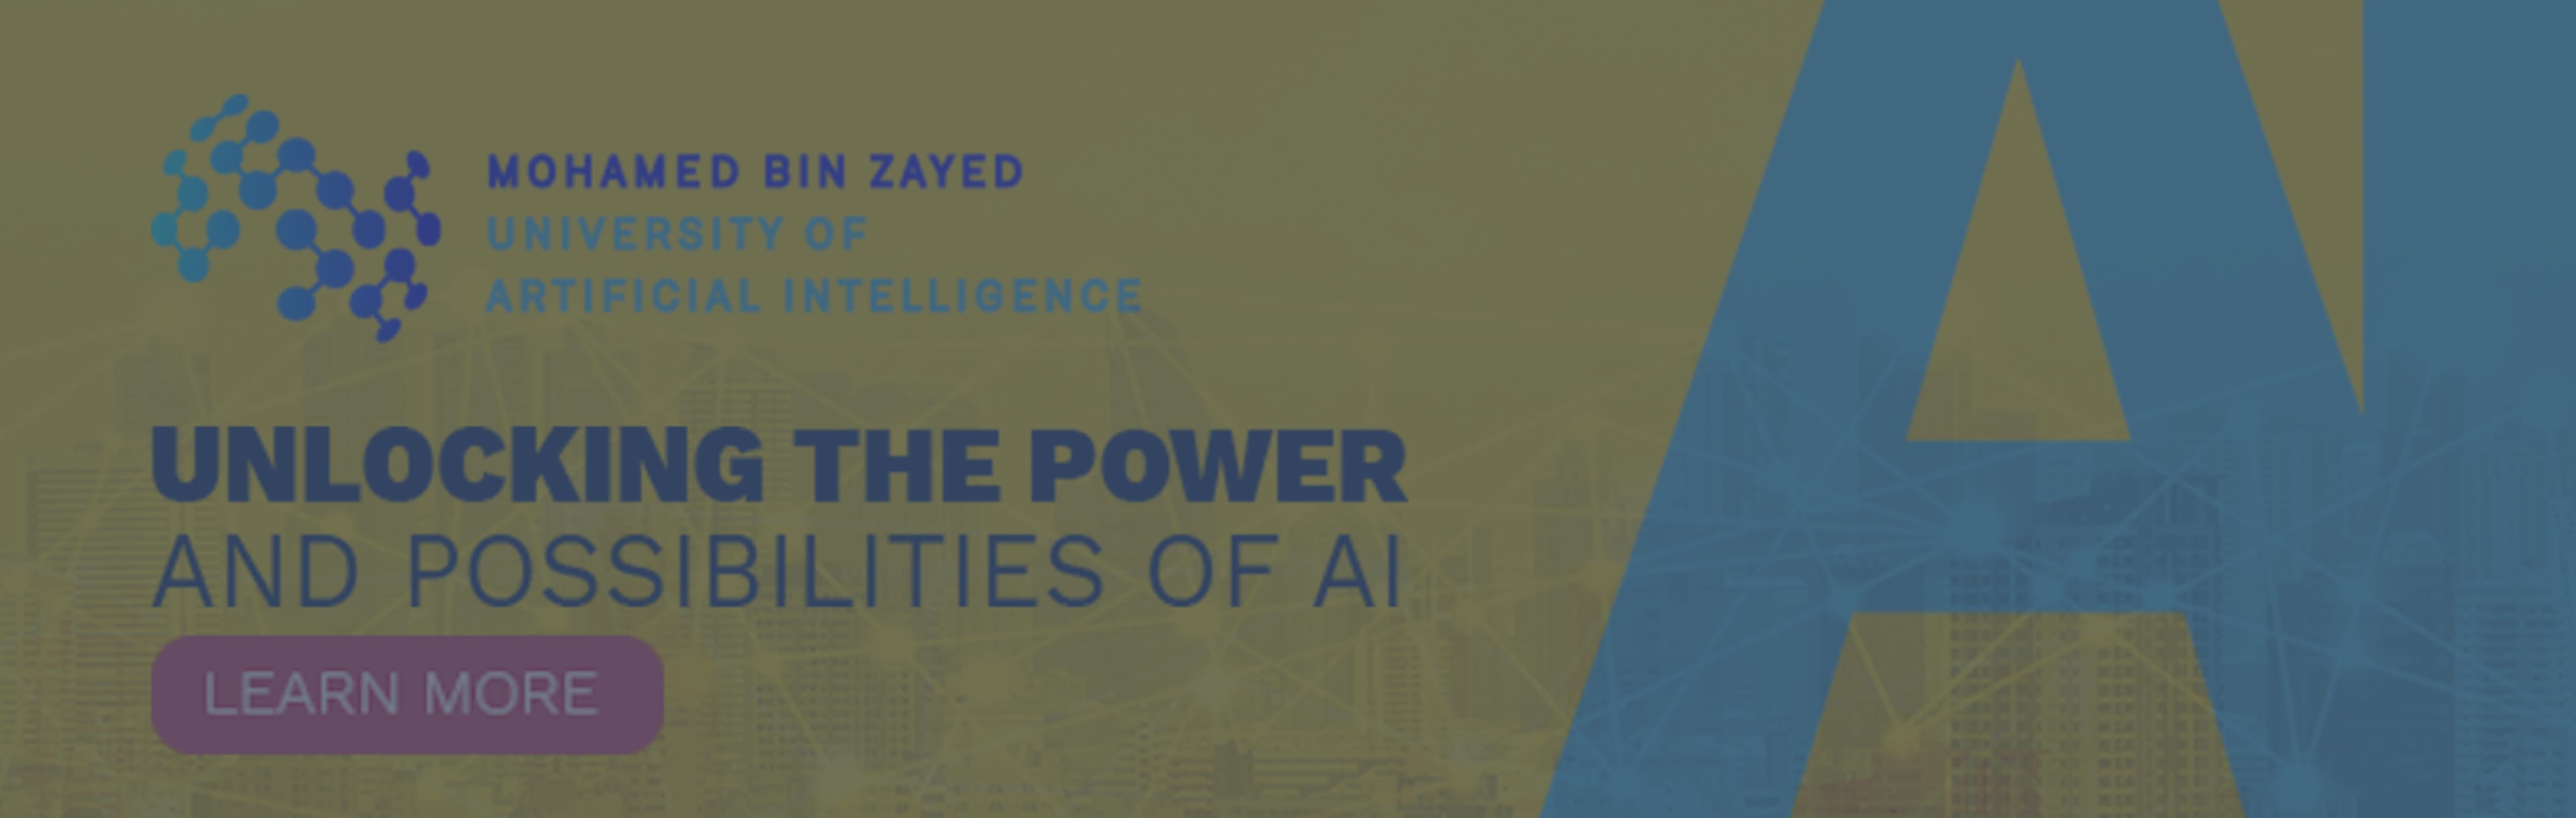 Mohamed bin Zayed University of Artificial Intelligence - MBZUAI Docteur en philosophie en vision par ordinateur